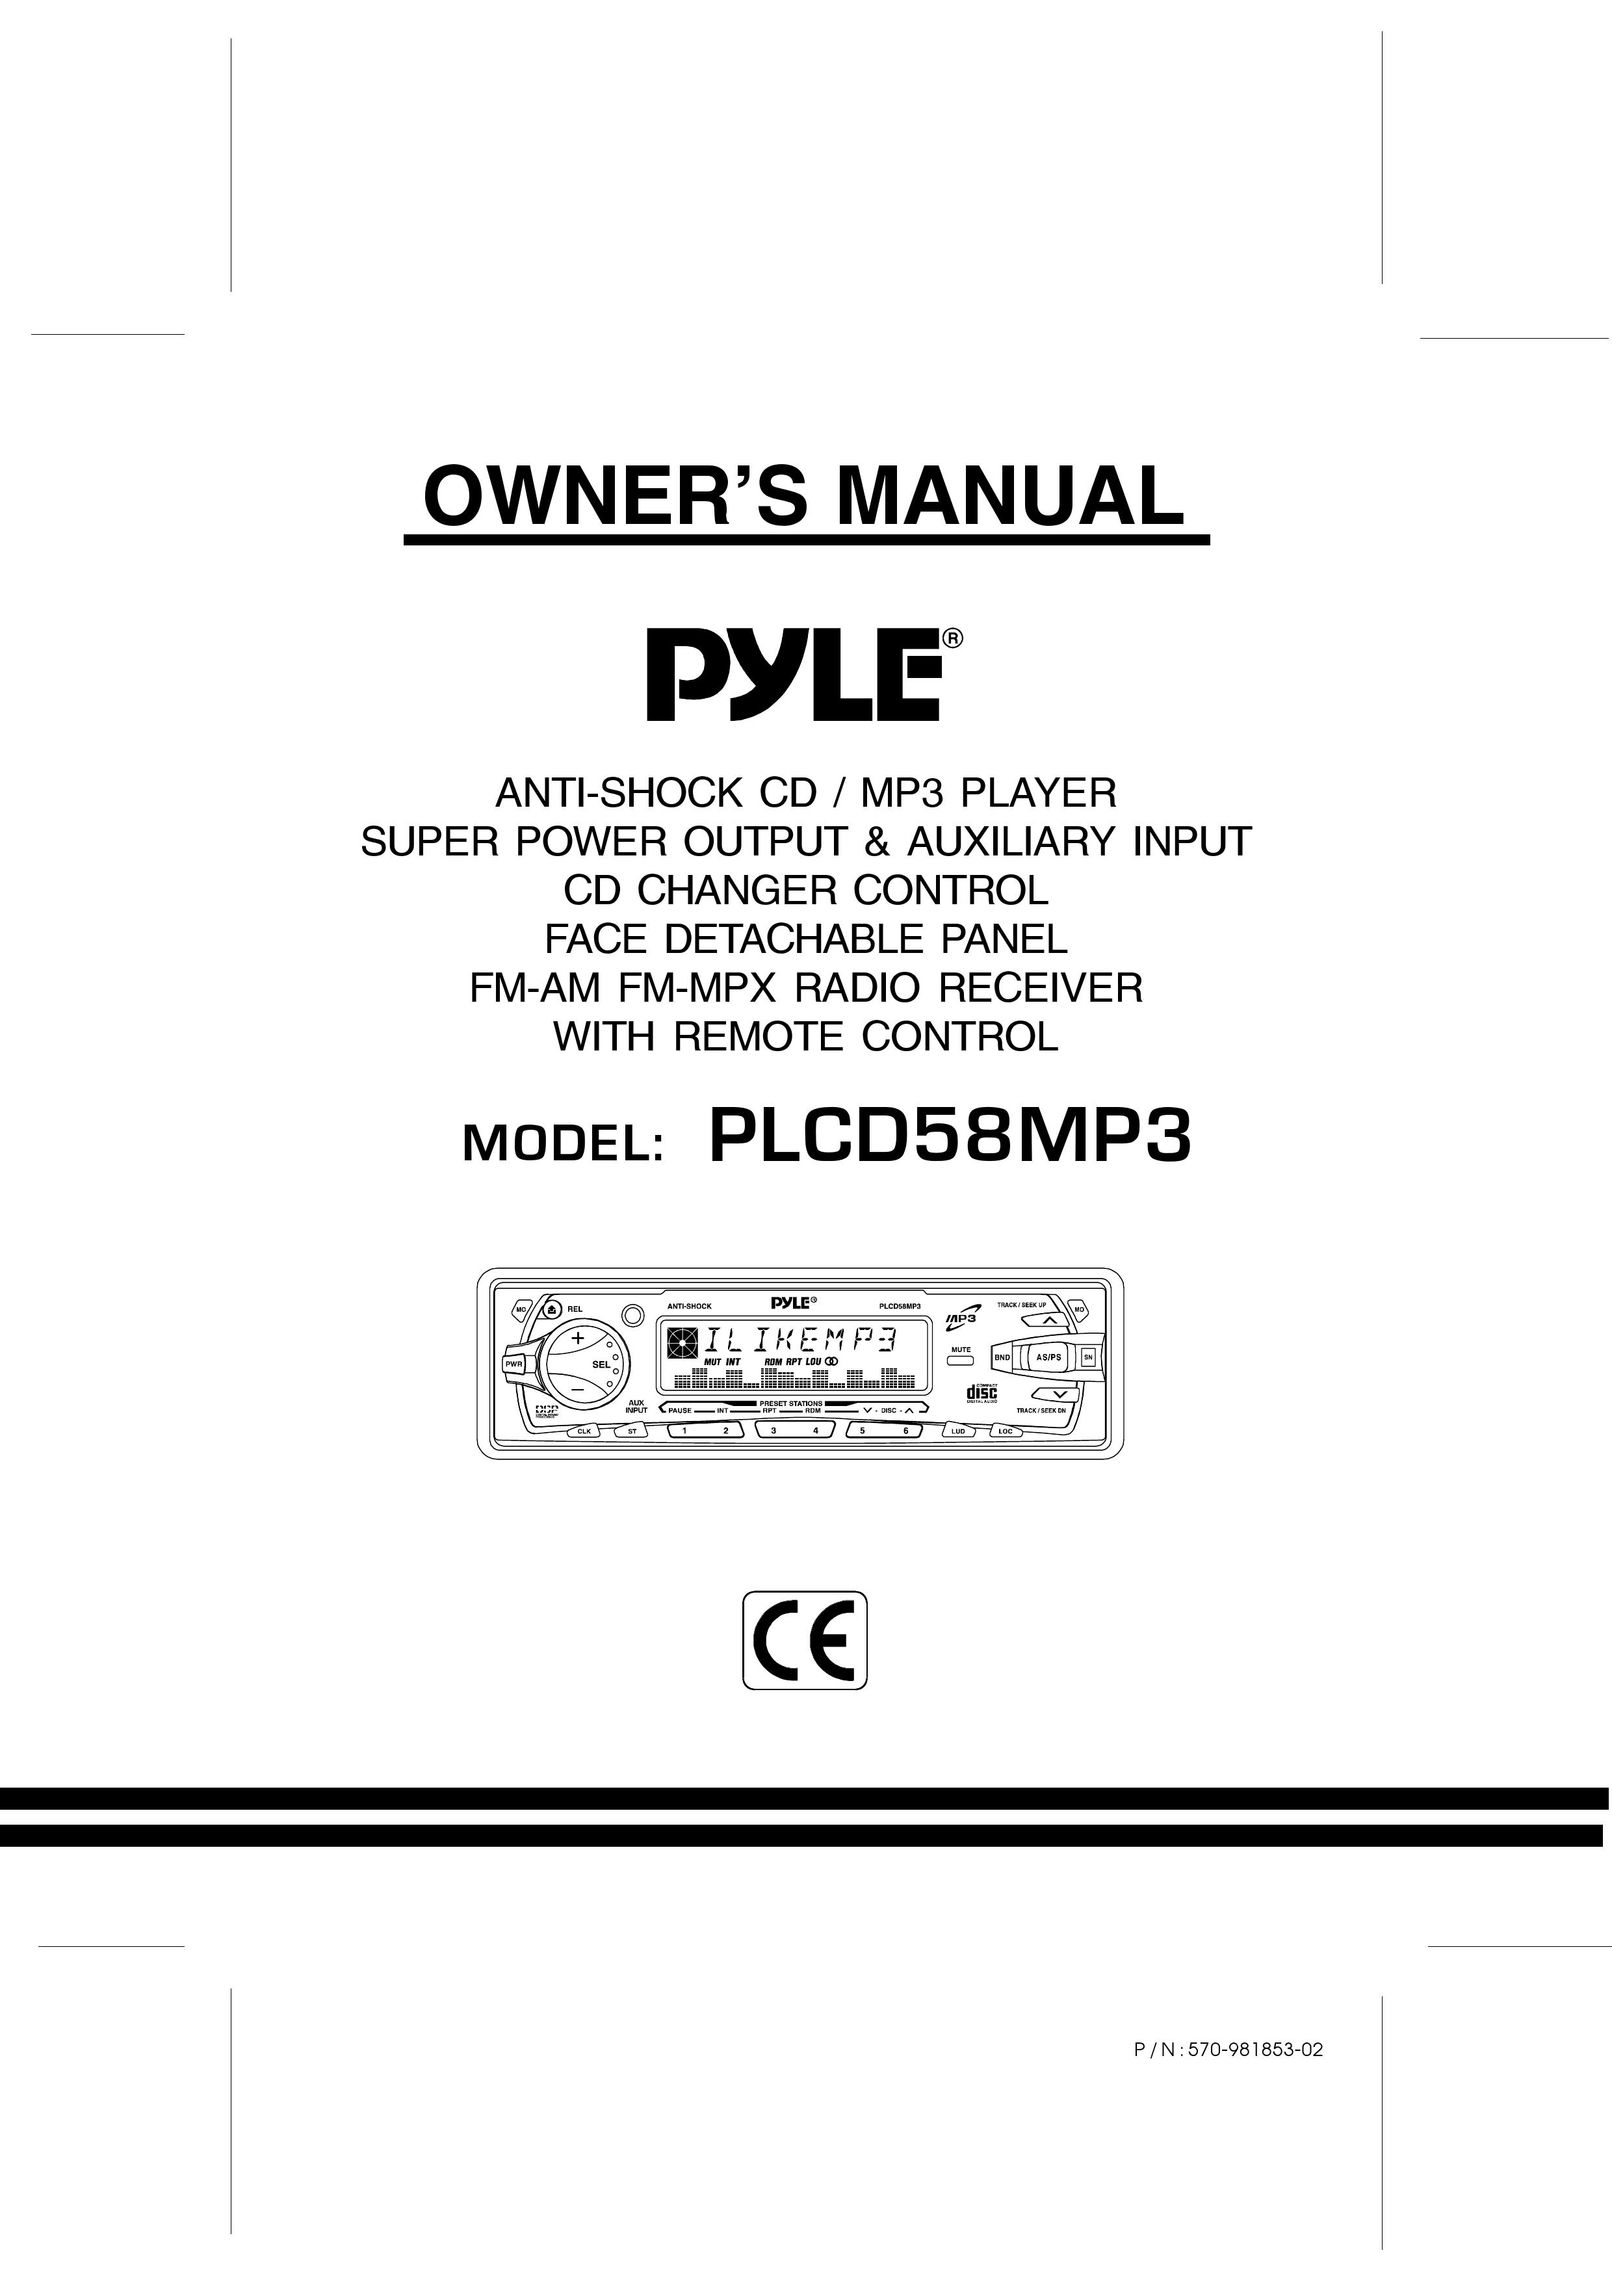 Radio Shack PLCD58MP3 Car Stereo System User Manual